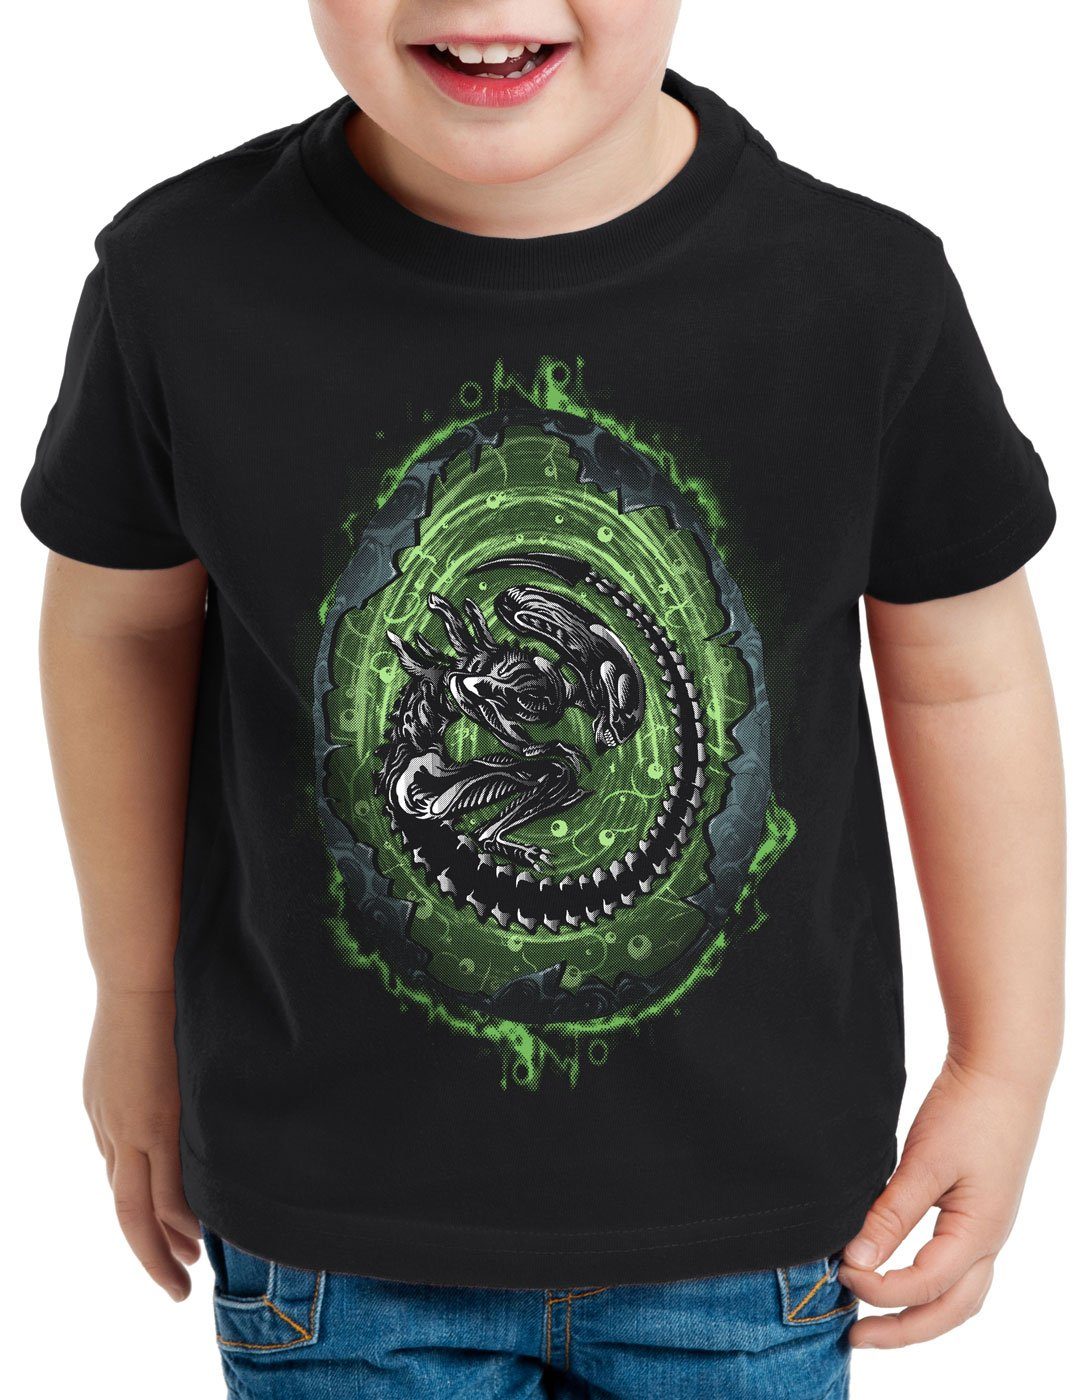 Print-Shirt Alien xenomorph style3 Brut Kinder T-Shirt